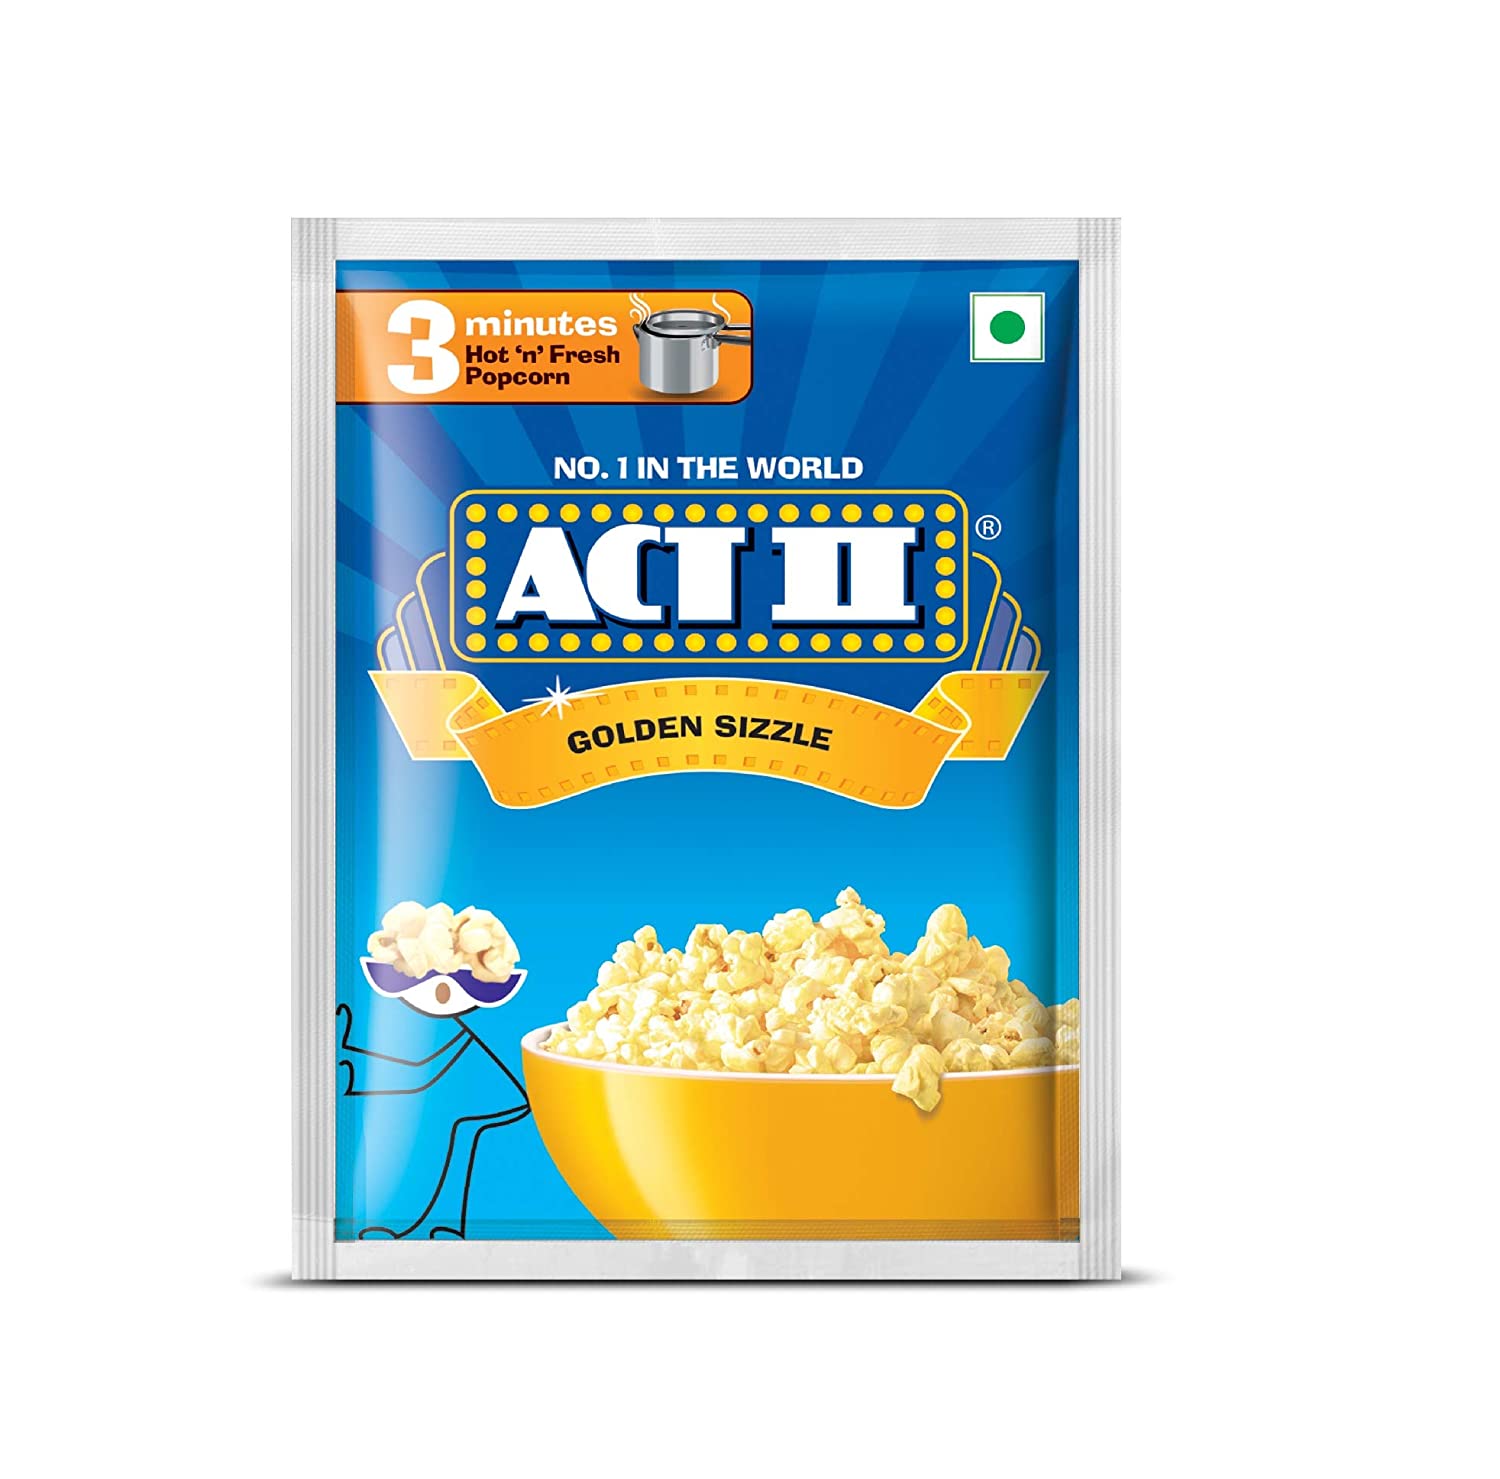 ACT II Instant Popcorn - GOLDEN SIZZLE FLAVOUR